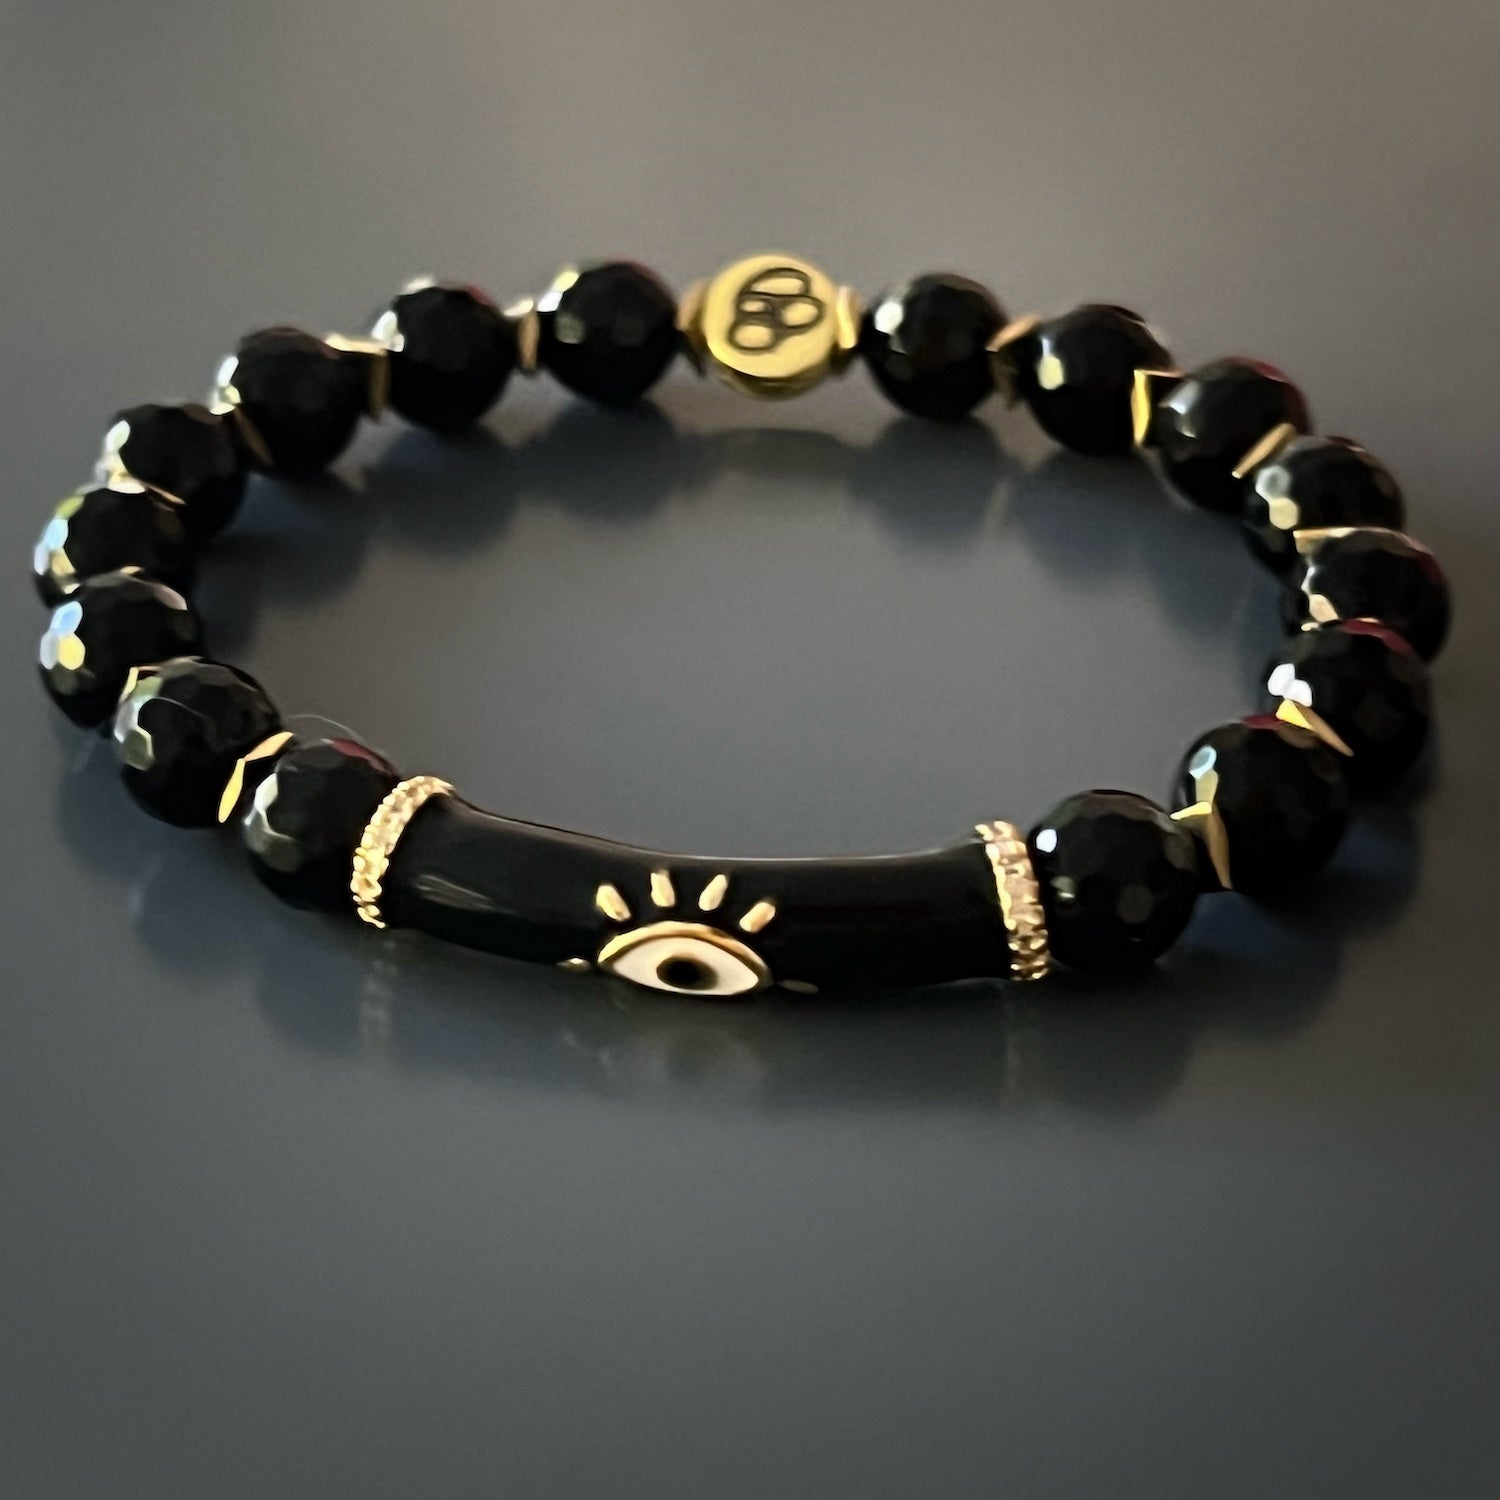 Stunning Black Onyx and Gold Bracelet with Evil Eye Charm